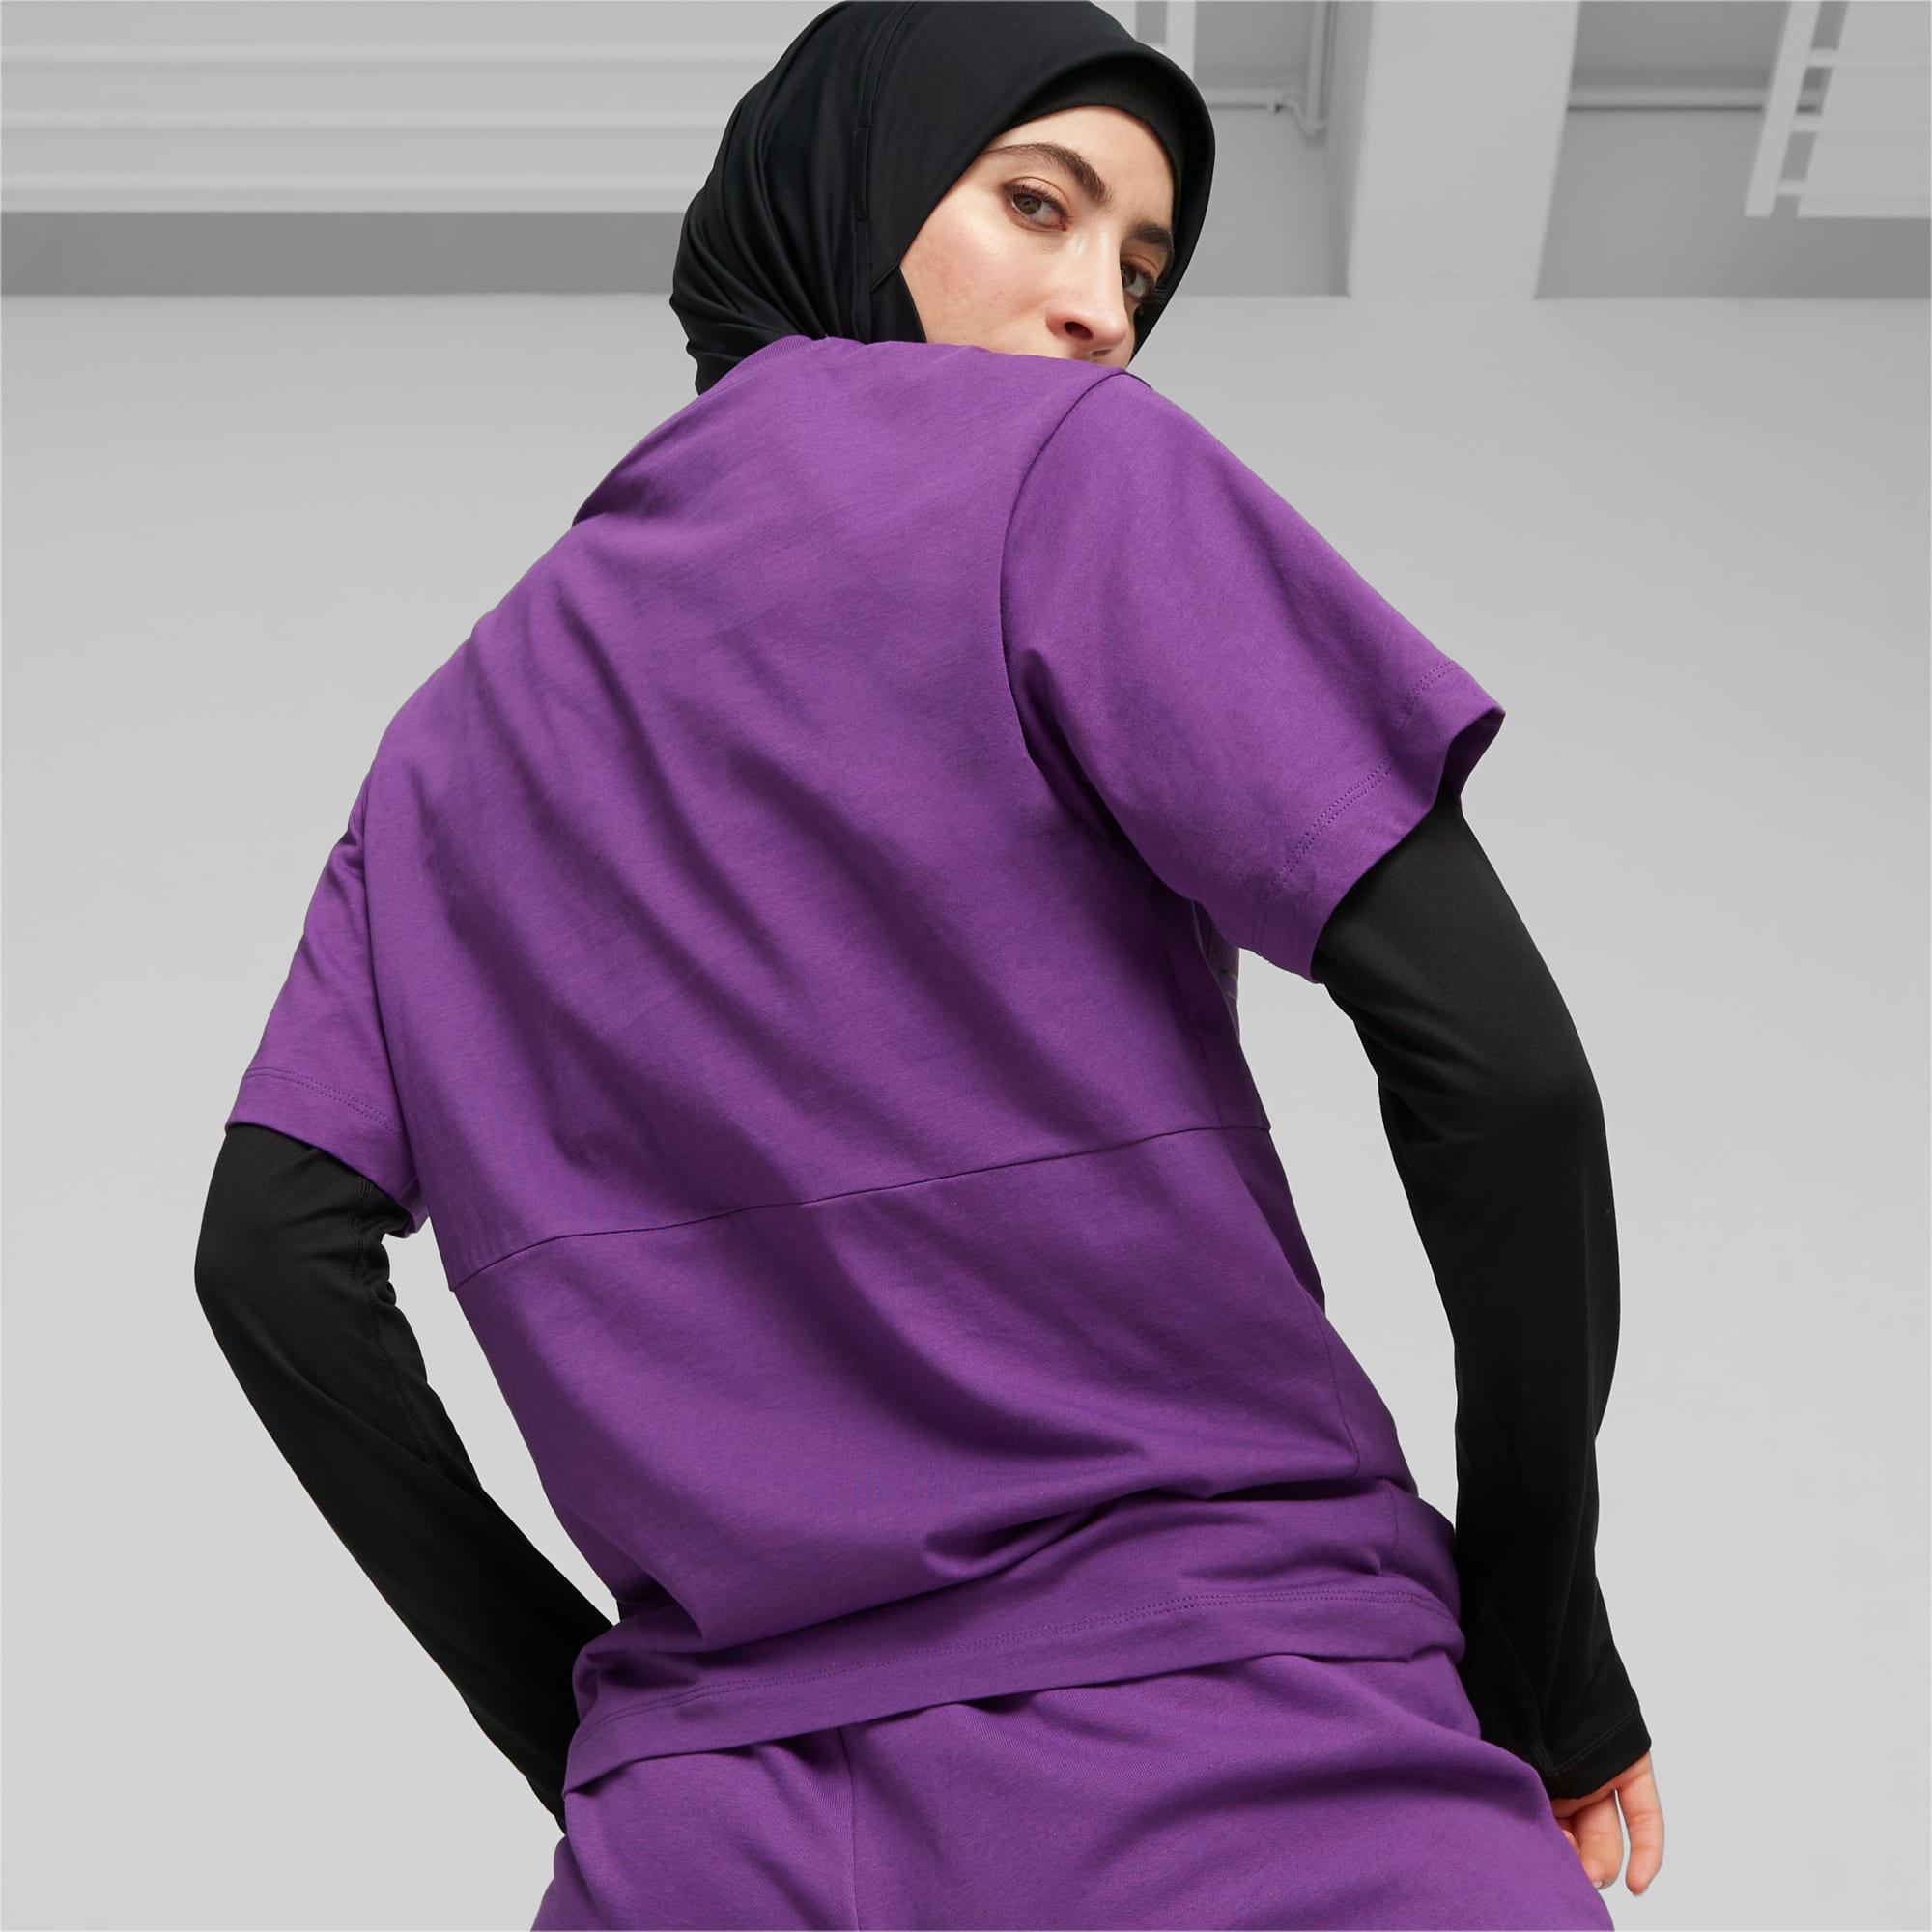 PUMA Power Logo Love Women's T-Shirt, Purple Pop, Size 3XL, Clothing